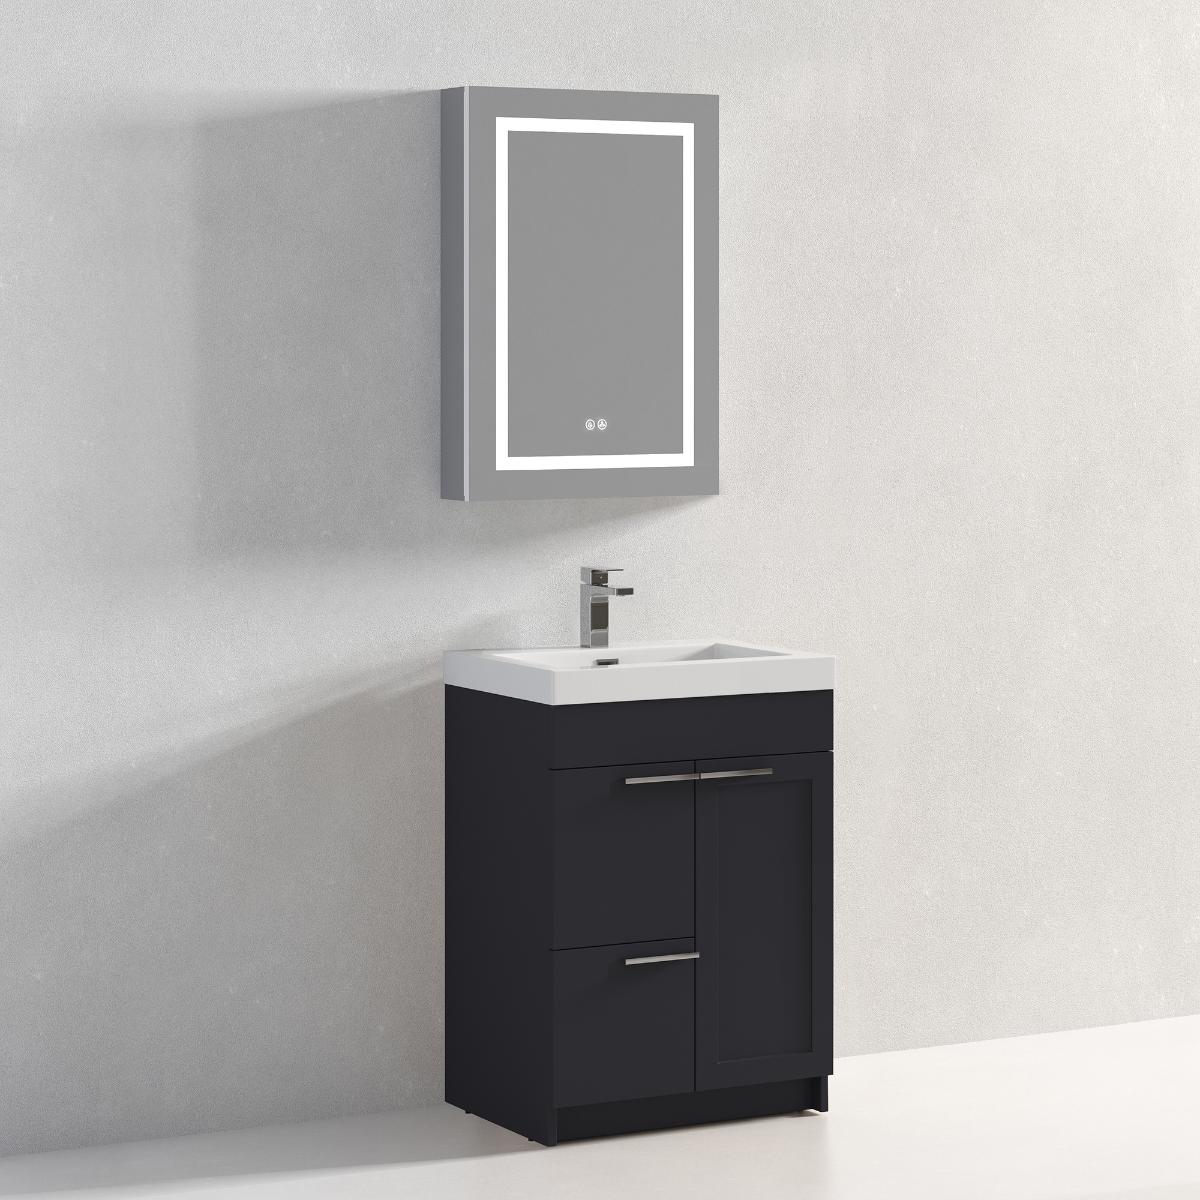 Hanover 24" Bathroom Vanity  #size_24"  #color_charcoal